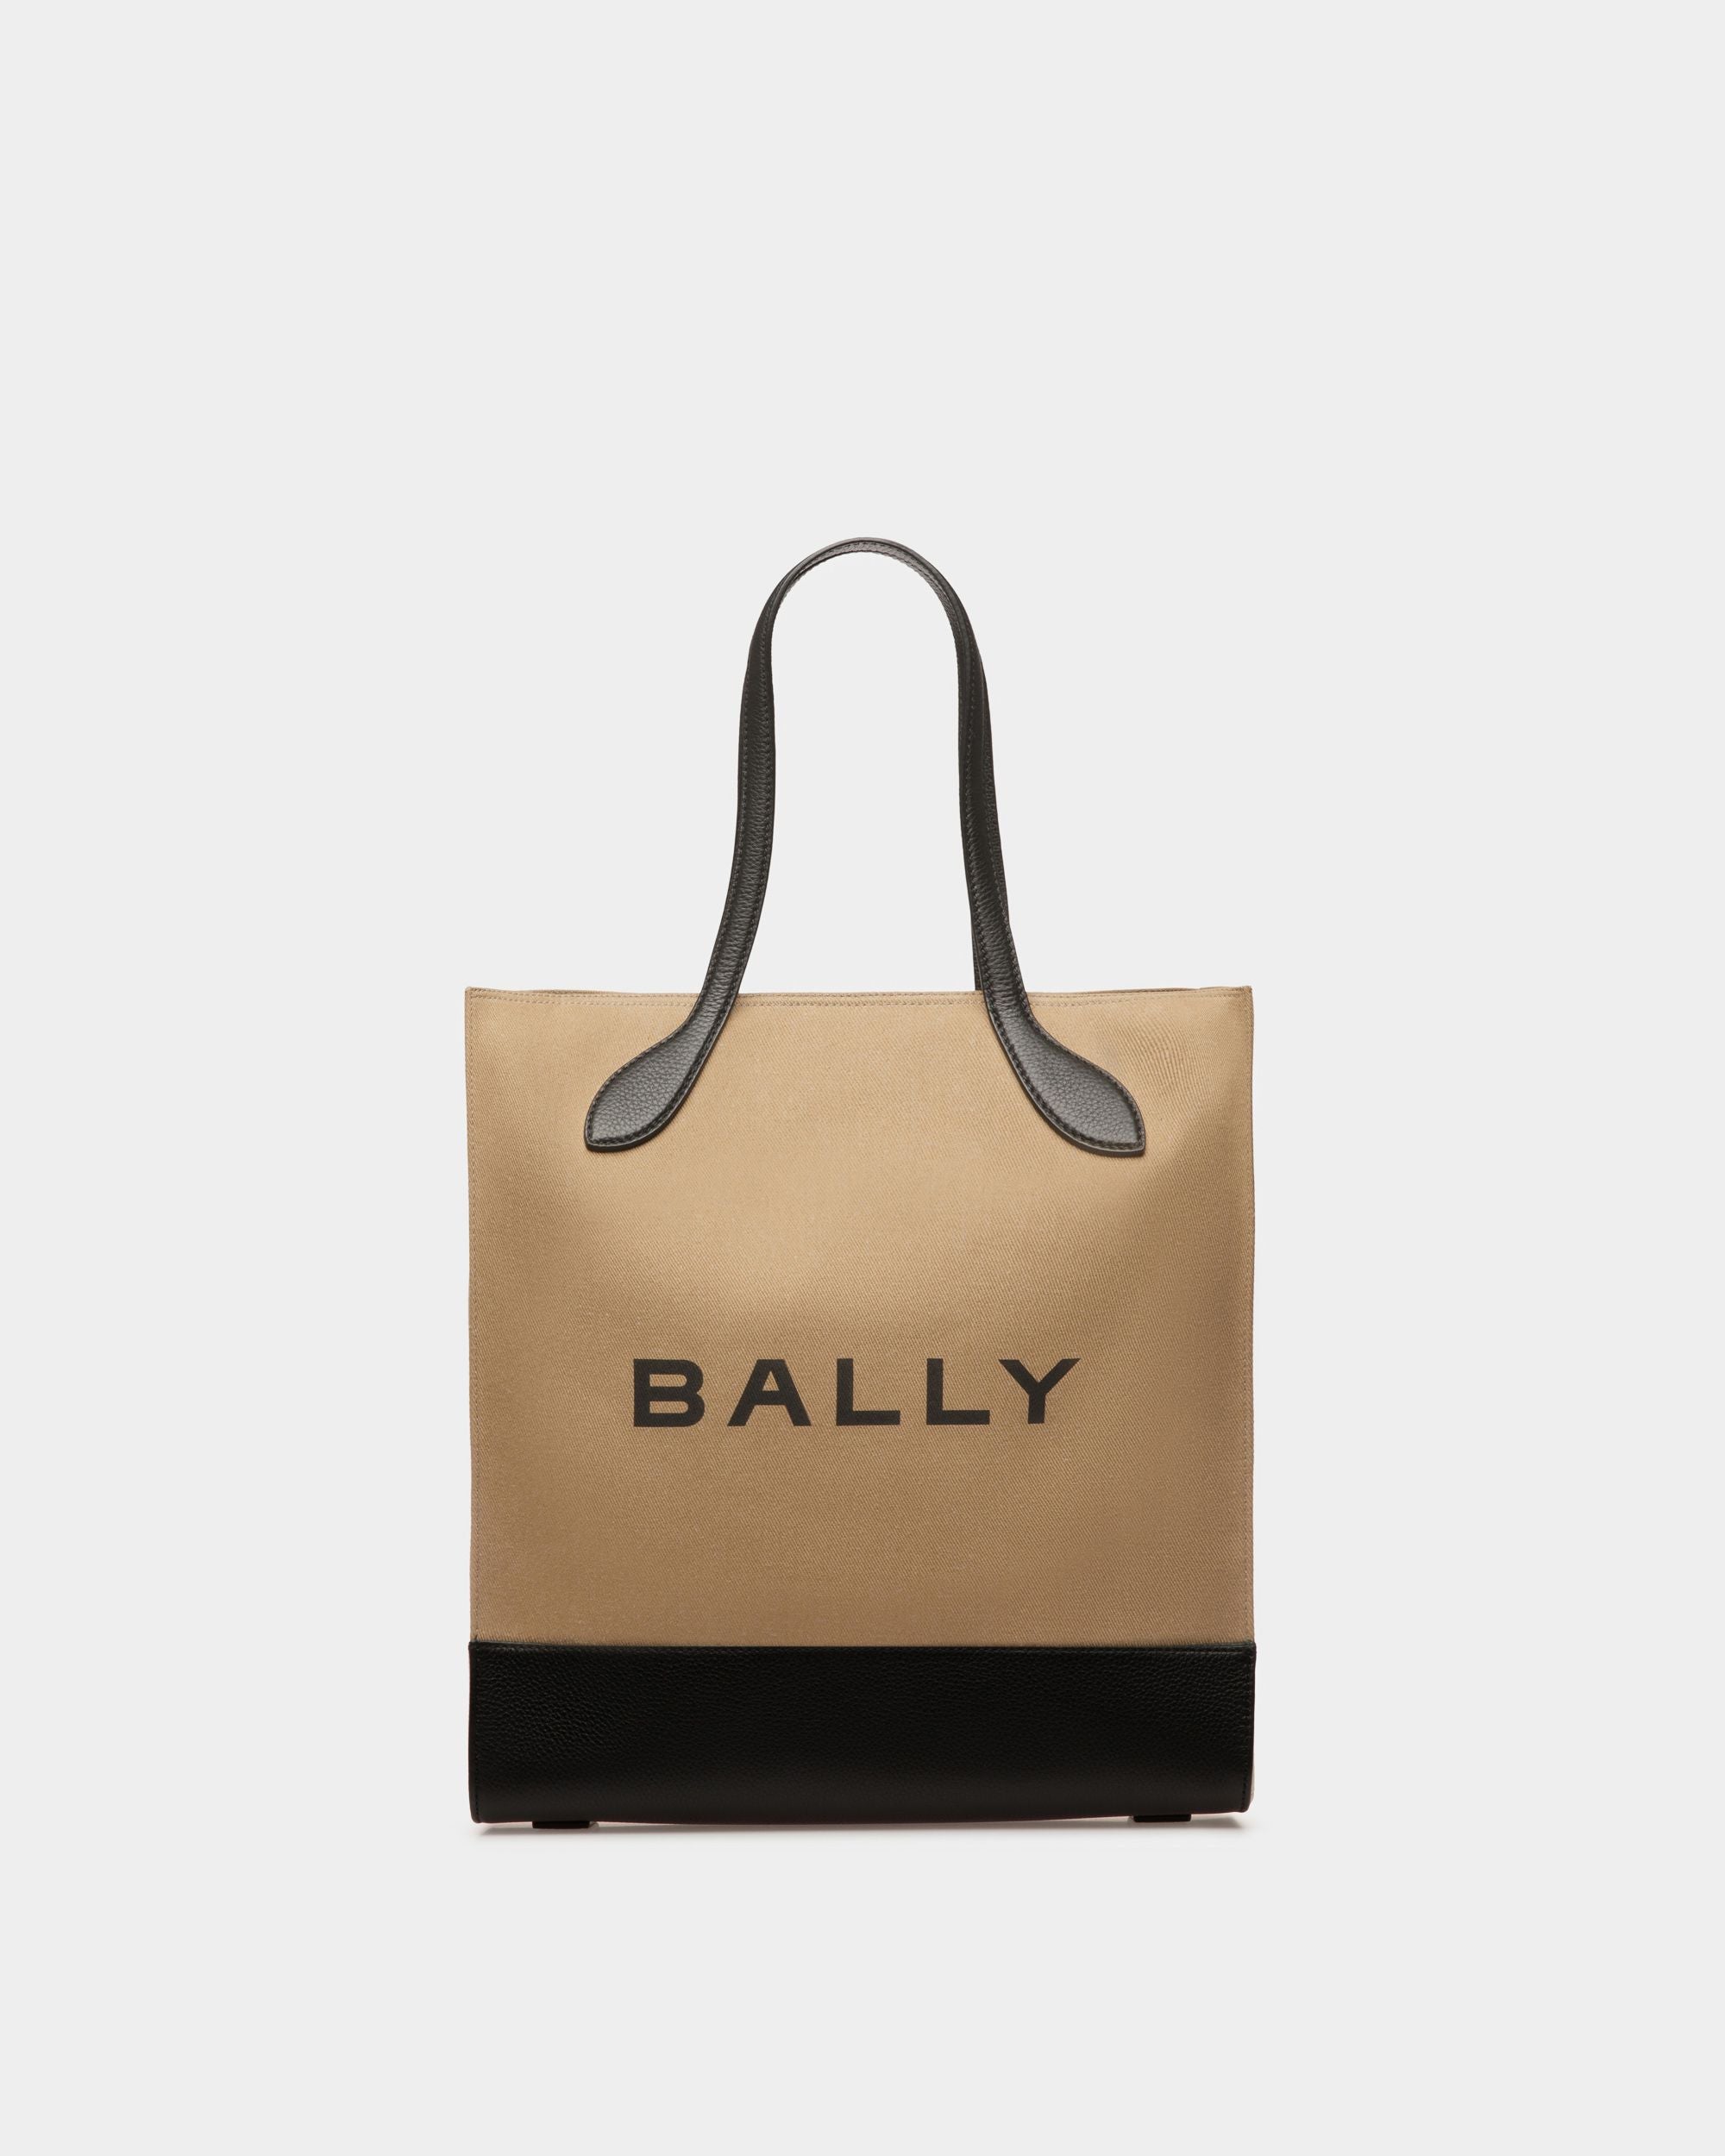 Bar Keep On | Tote bag donna | Tessuto color sabbia e nero | Bally | Still Life Fronte